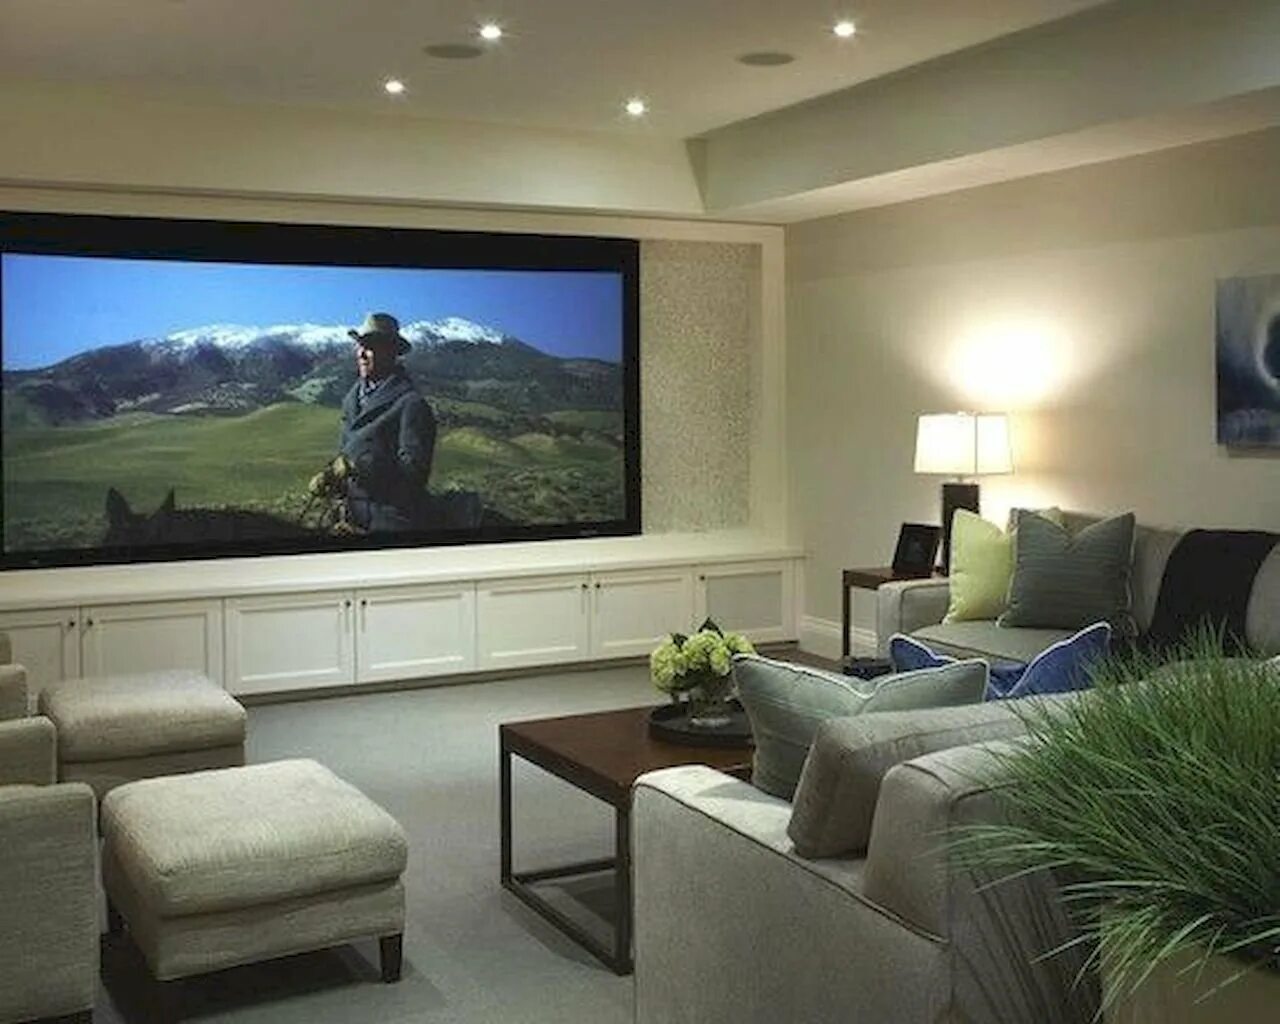 Комната с телевизором. Телевизор в интерьере. Уютная комната с телевизором. Гостиная с проектором. Комната с большим телевизором.